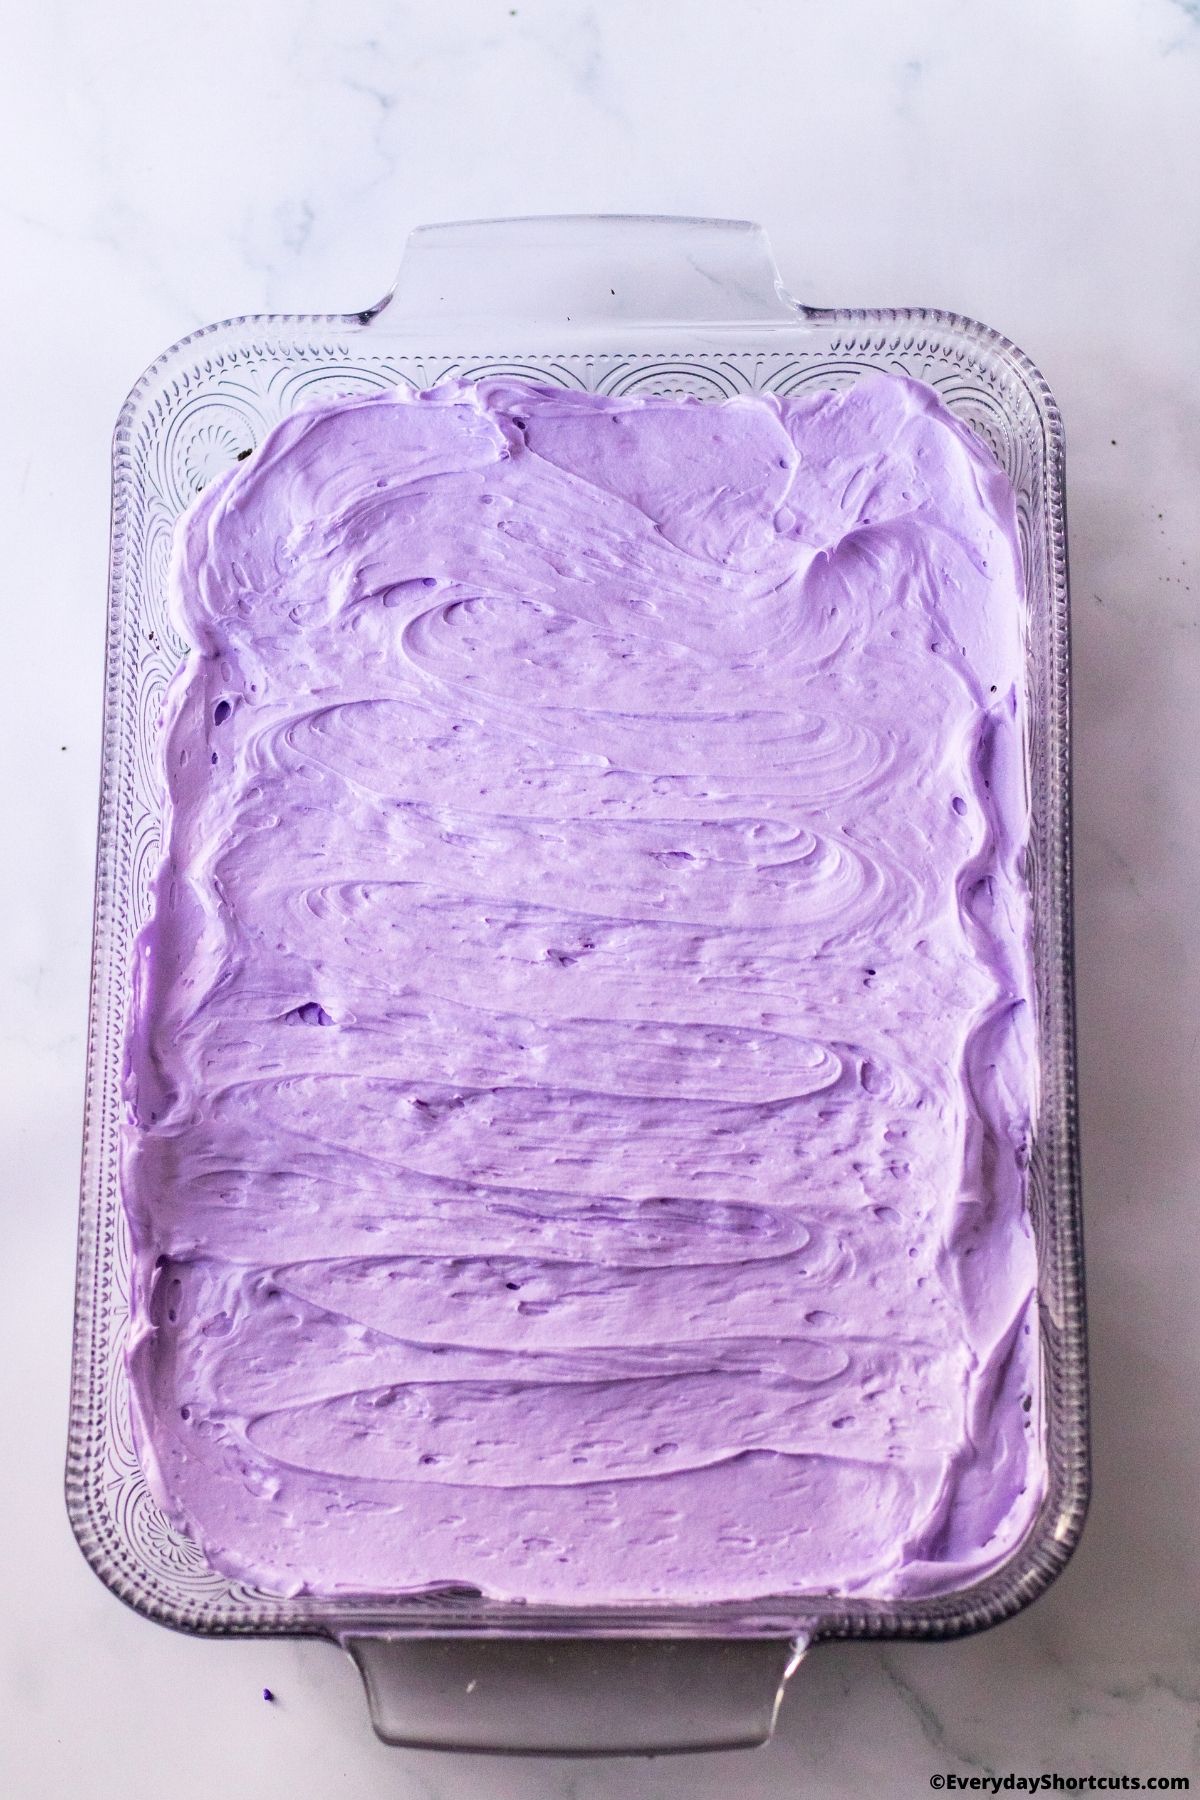 purple cream cheese layer in a baking dish